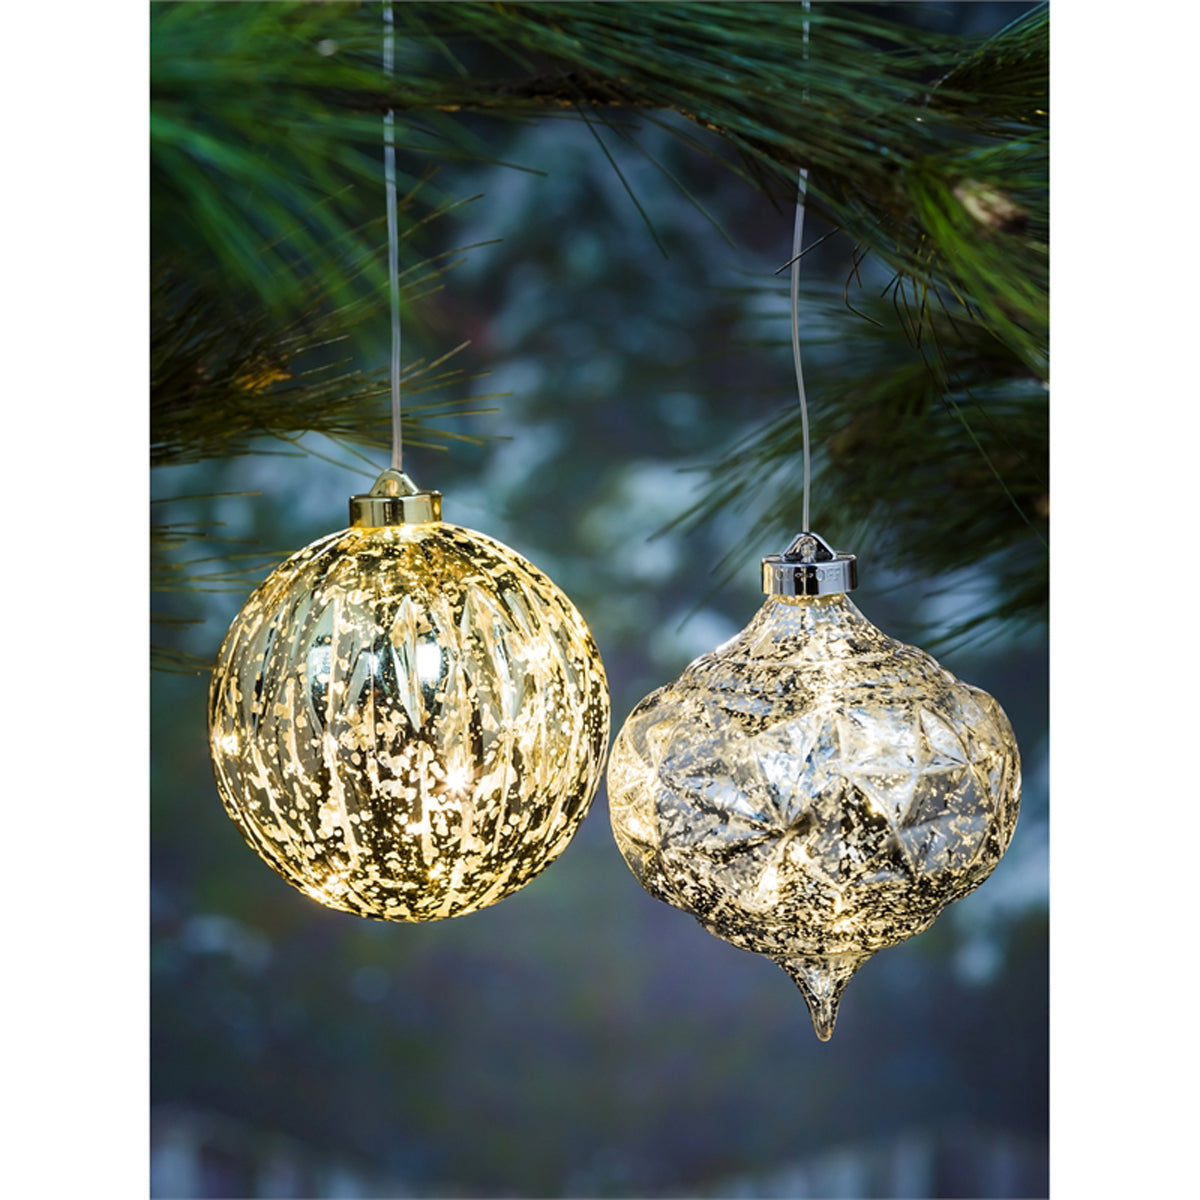 5" Shatterproof Outdoor LED Ornament